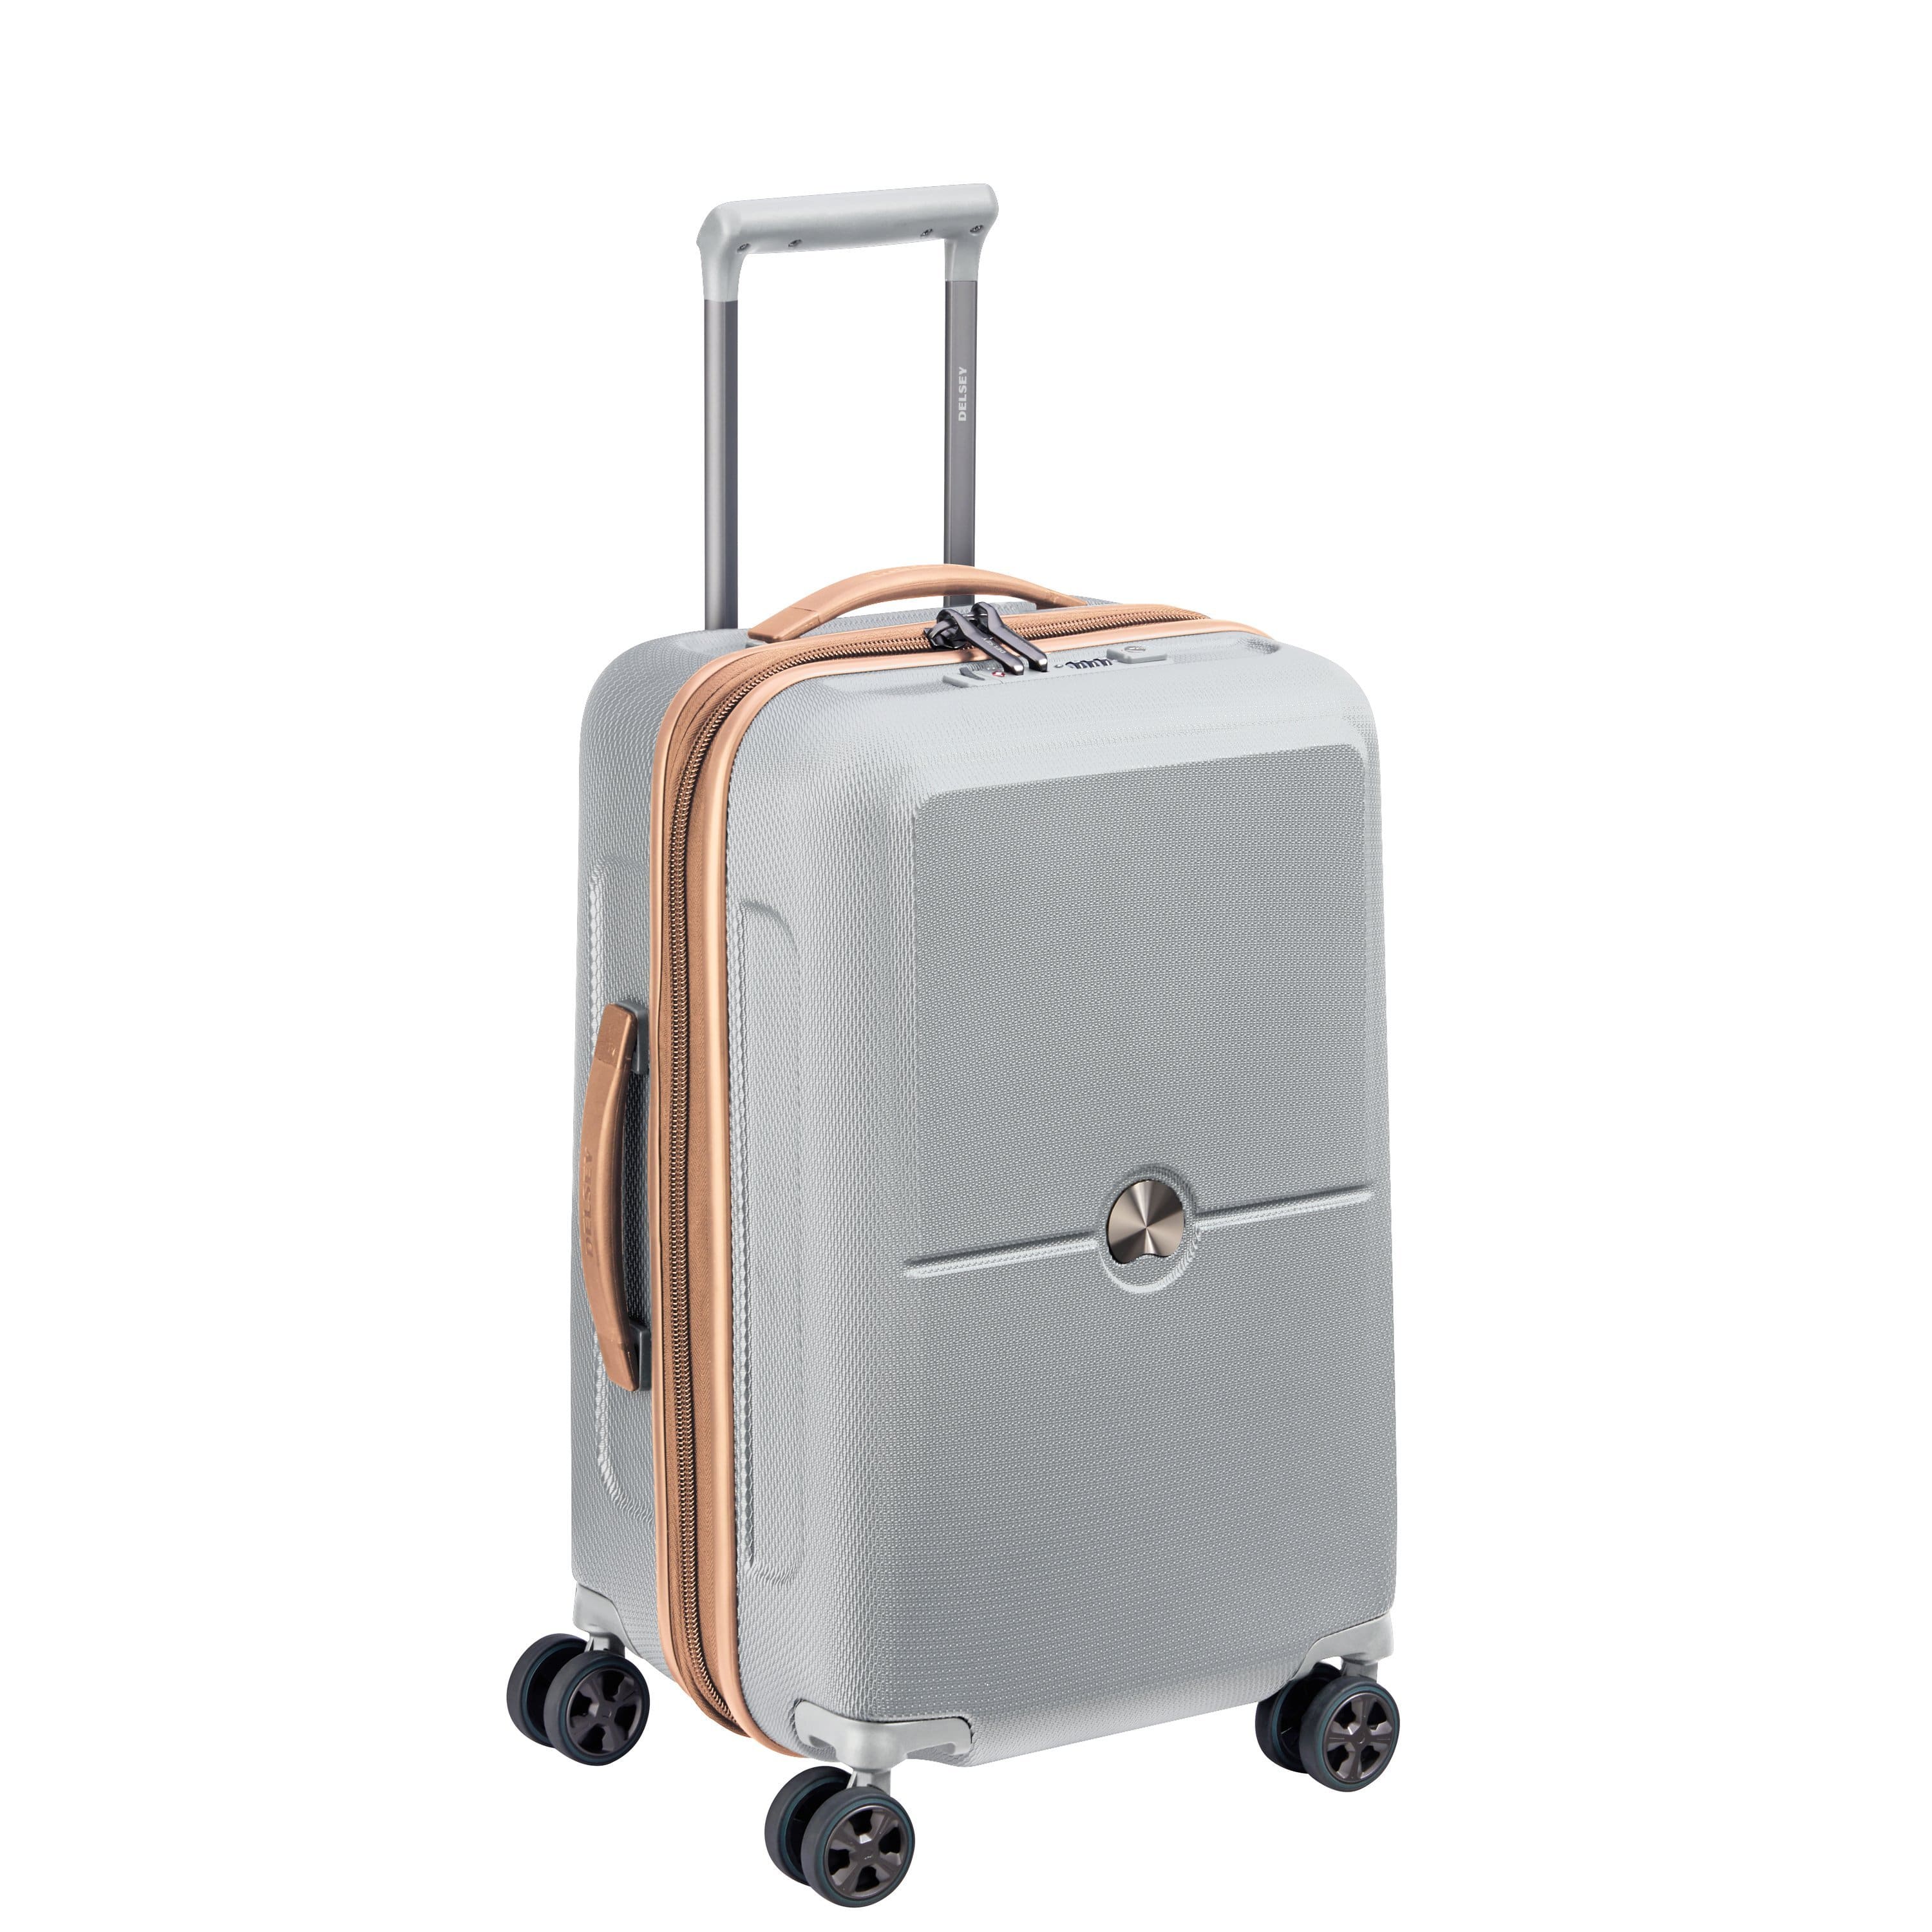 Delsey Turenne Prem 55cm Hardcase 4 Double Wheel Cabin Luggage Trolley Silver - 00162480111